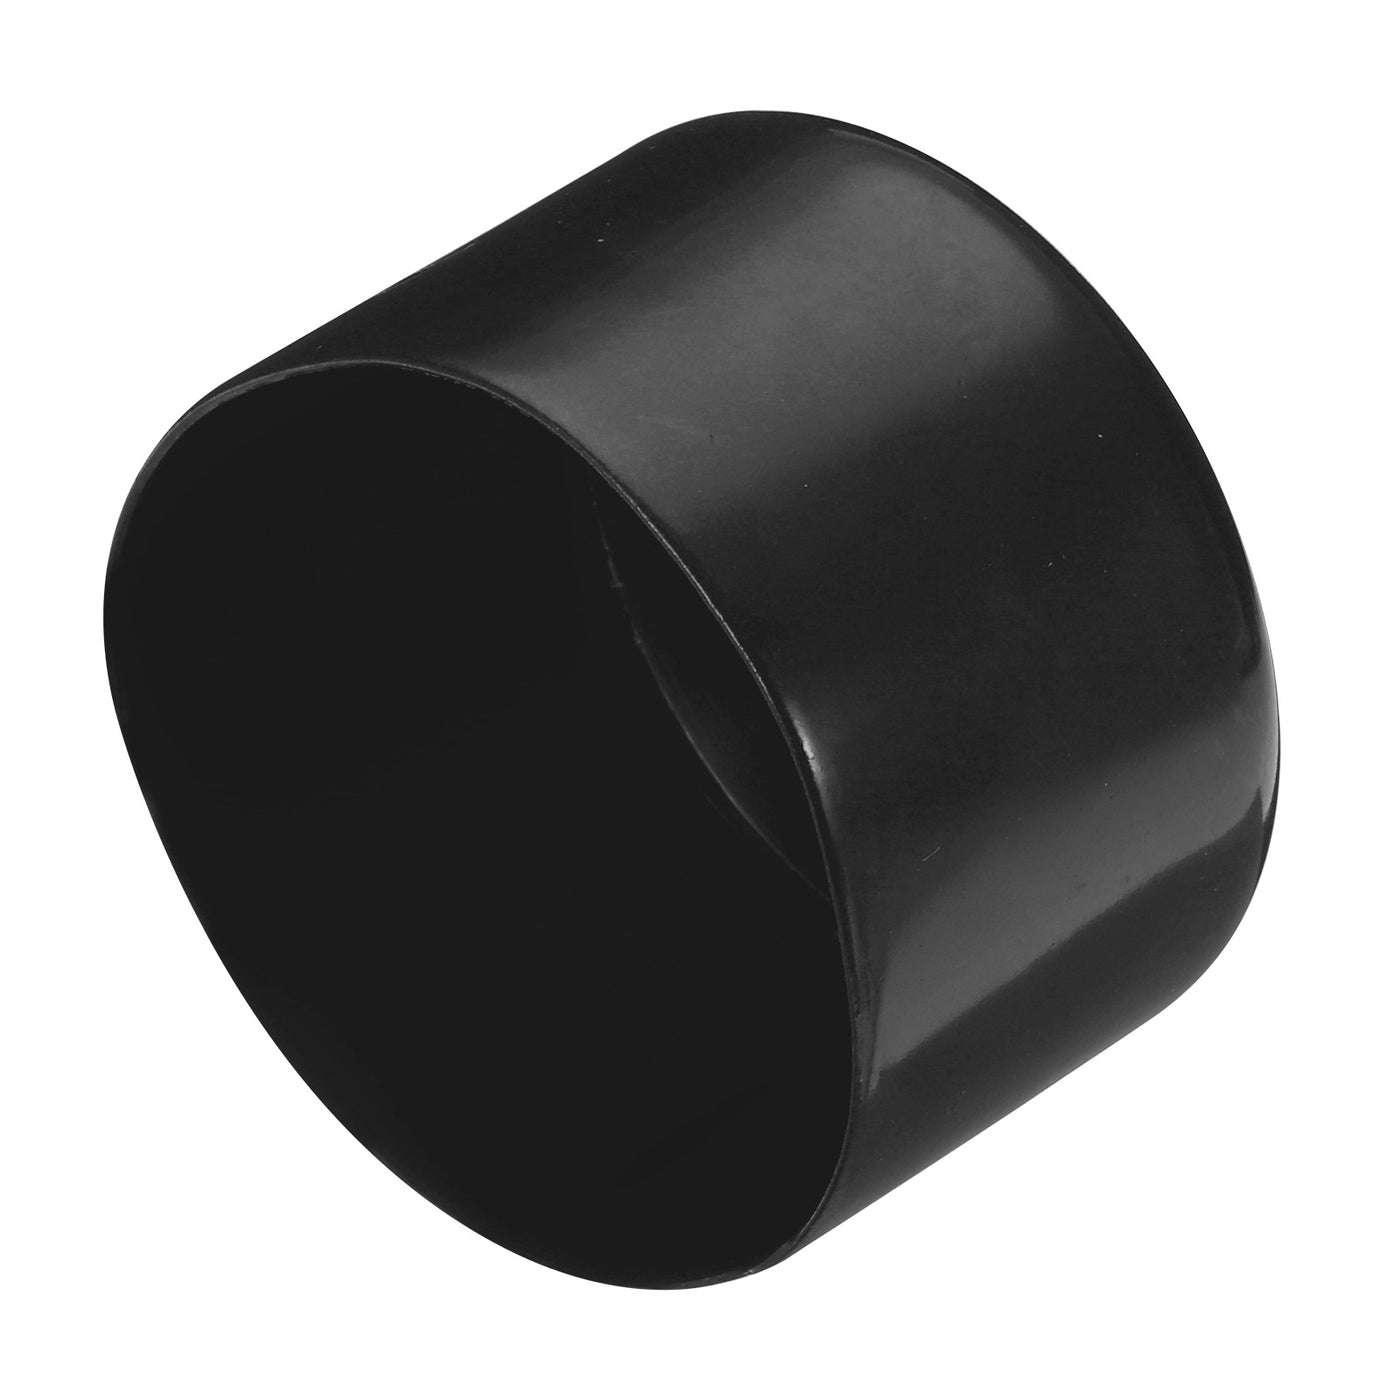 uxcell Uxcell 4pcs Rubber End Caps 75mm ID Vinyl Round Tube Bolt Cap Cover Screw Thread Protectors Black